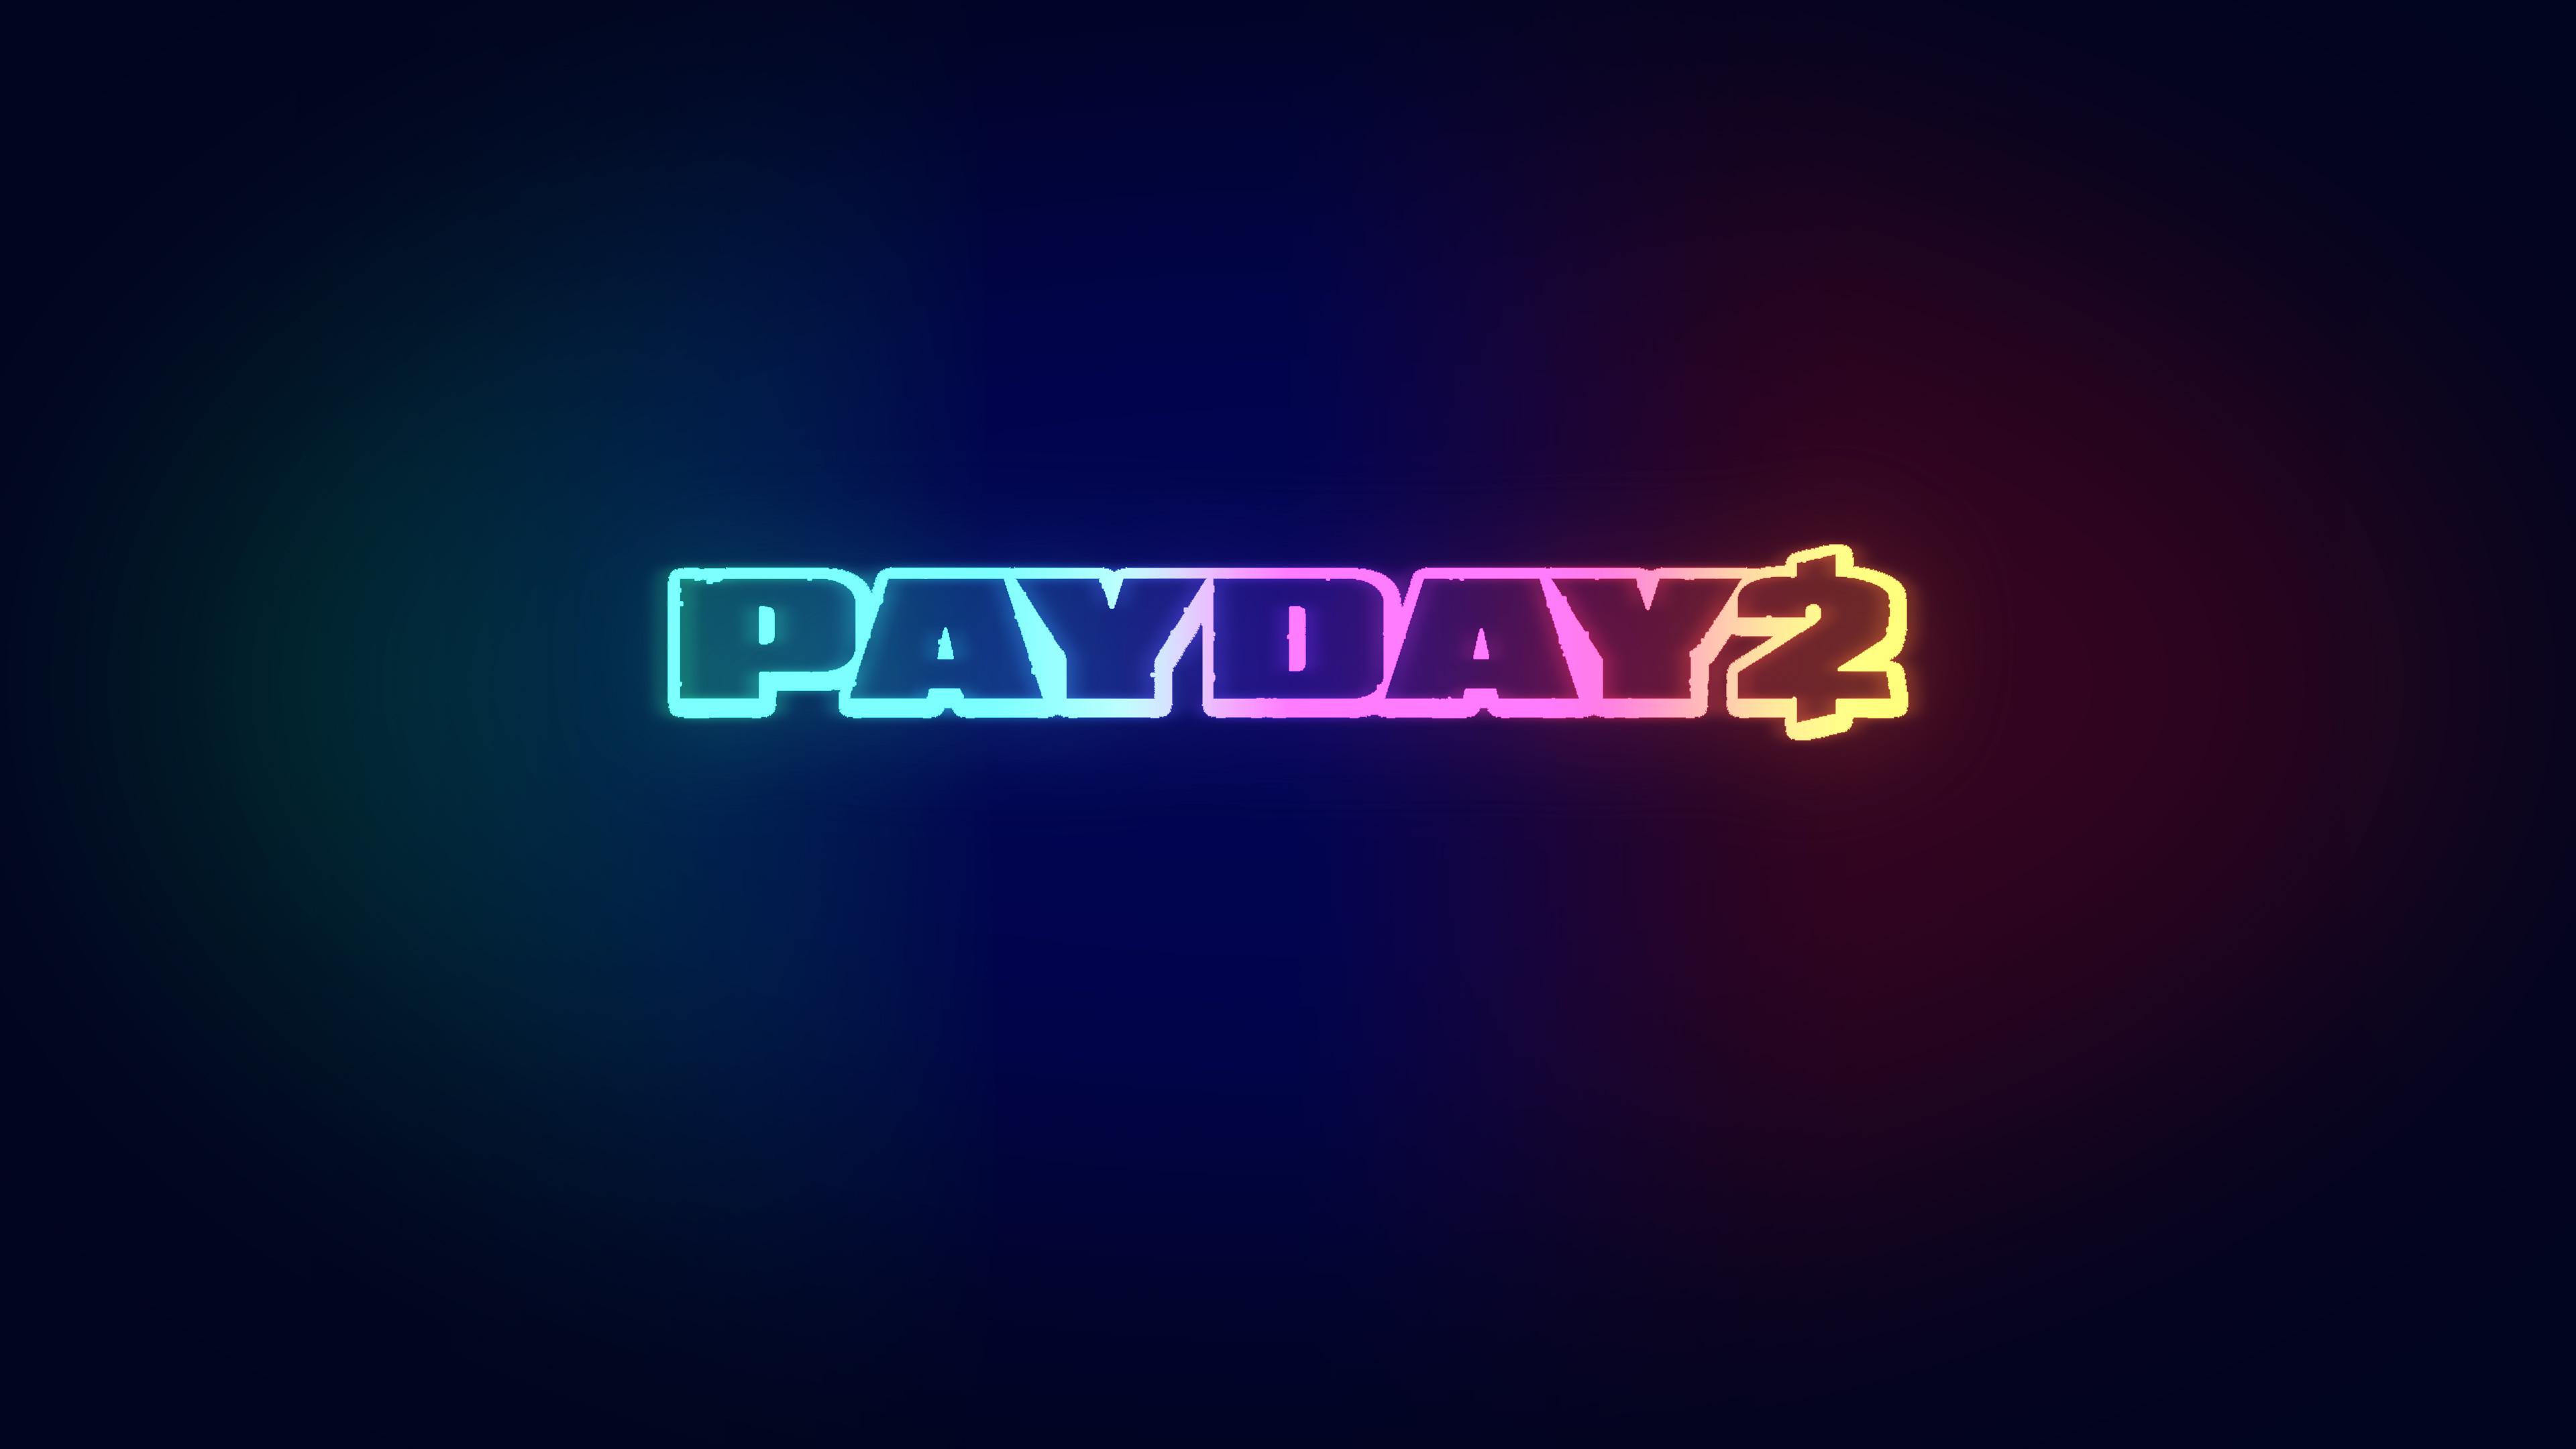 Neon payday 2 wallpaper 3240 x 2160 .reddit.com